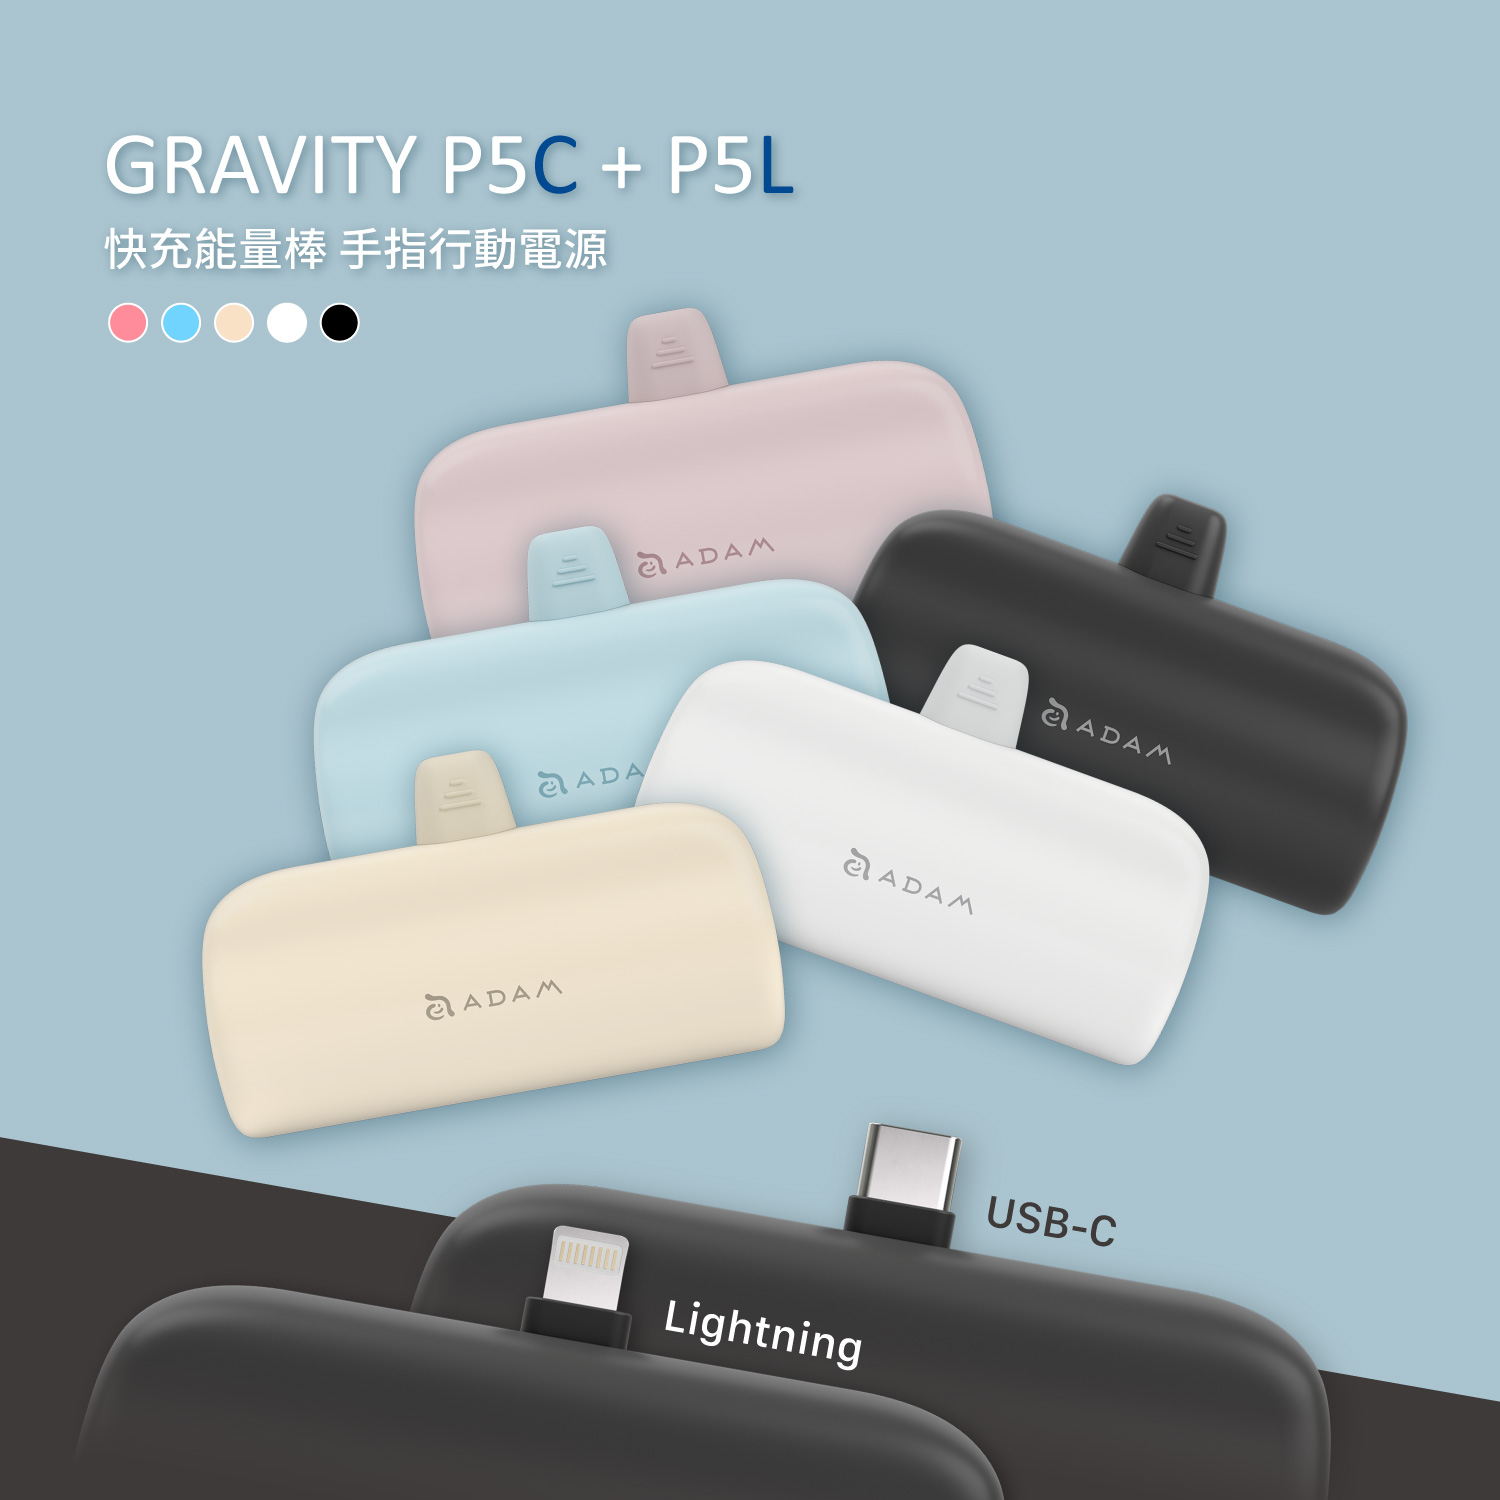 GRAVITY P5C USB-C 口袋型行動電源+GRAVITY P5L Lightning 口袋型行動電源